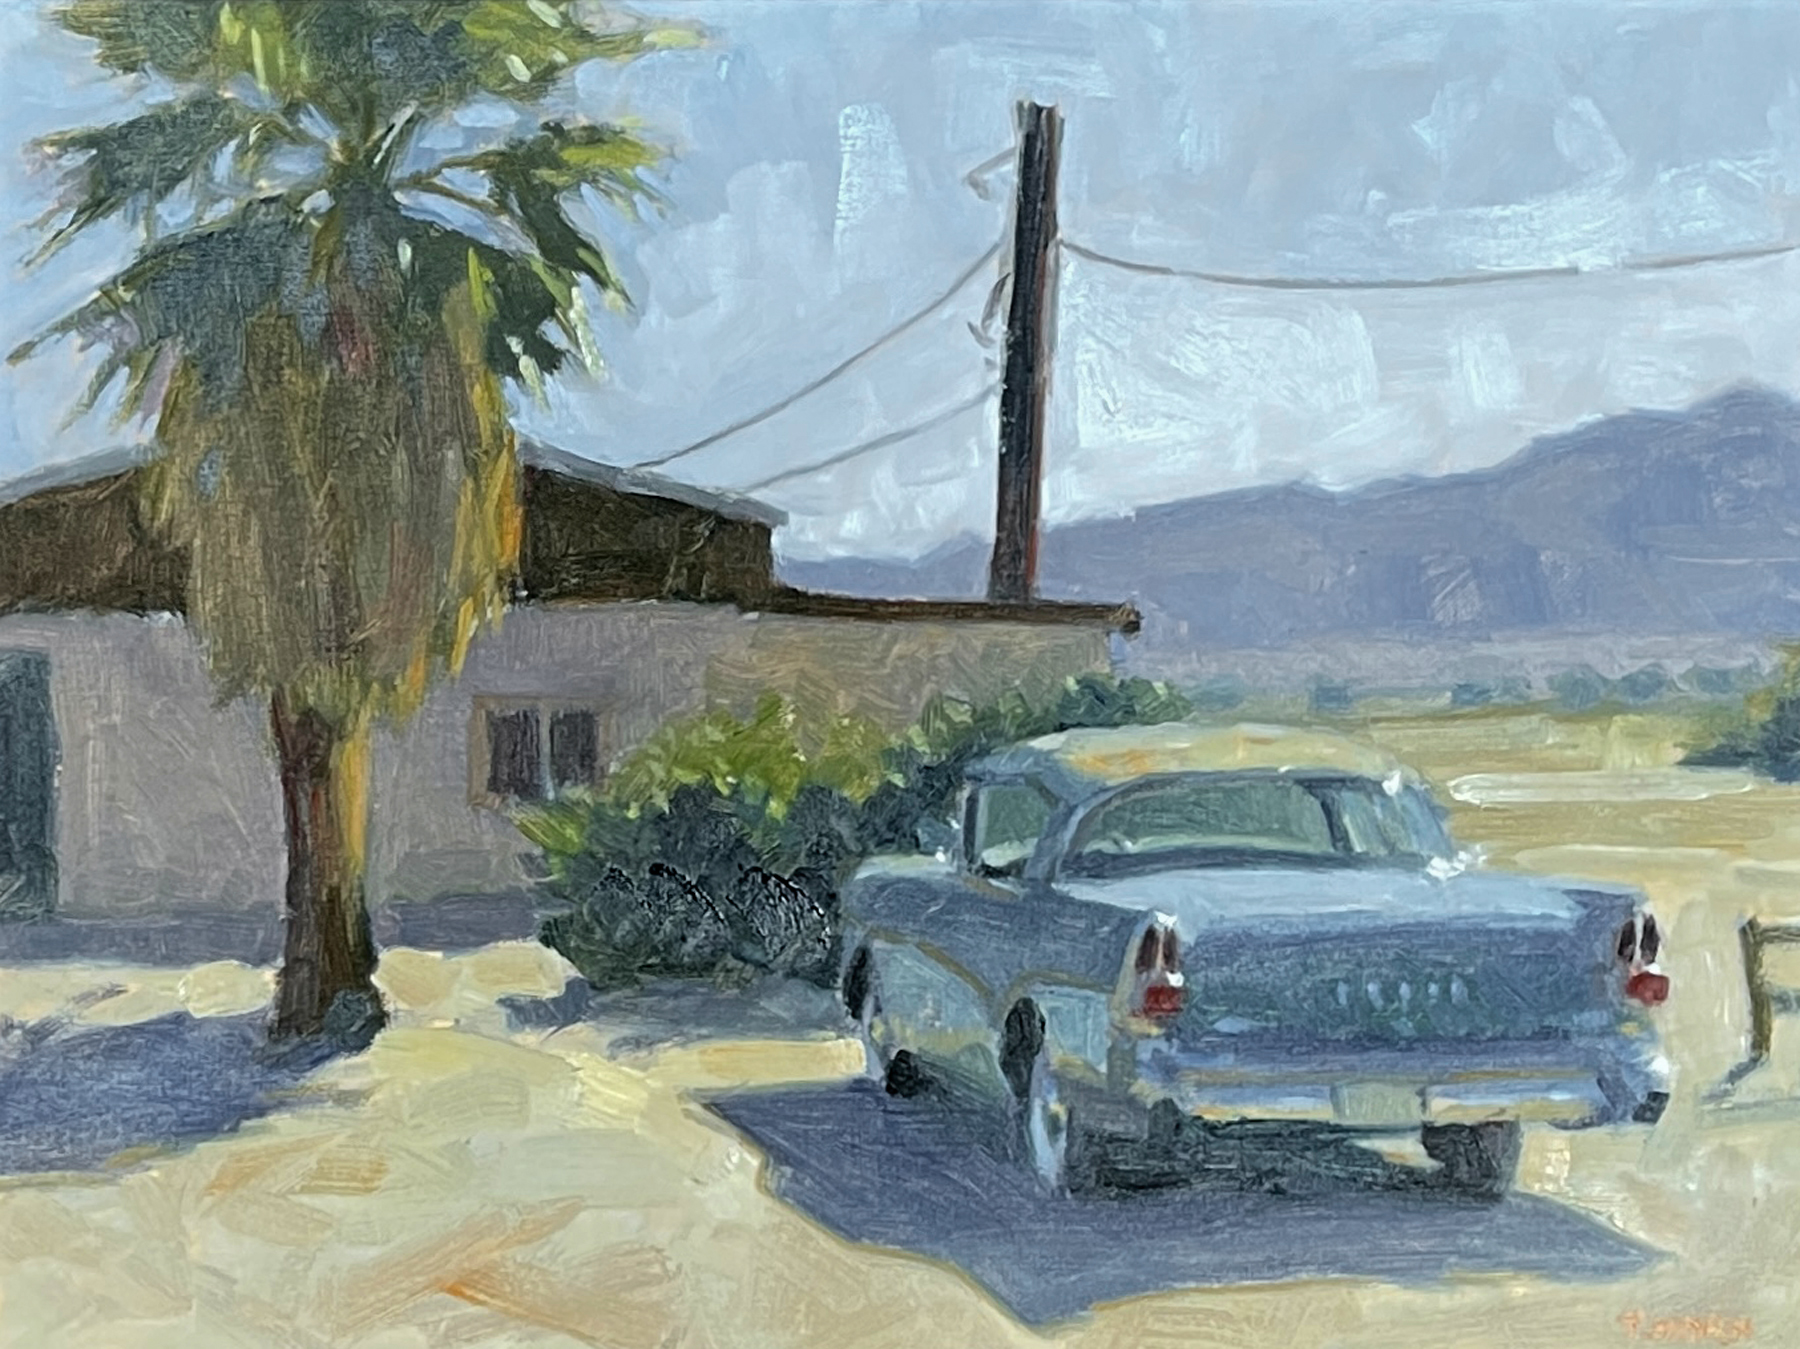 Tim Horn, “Desert Patina,” 12 x 16 in., oil, plein air